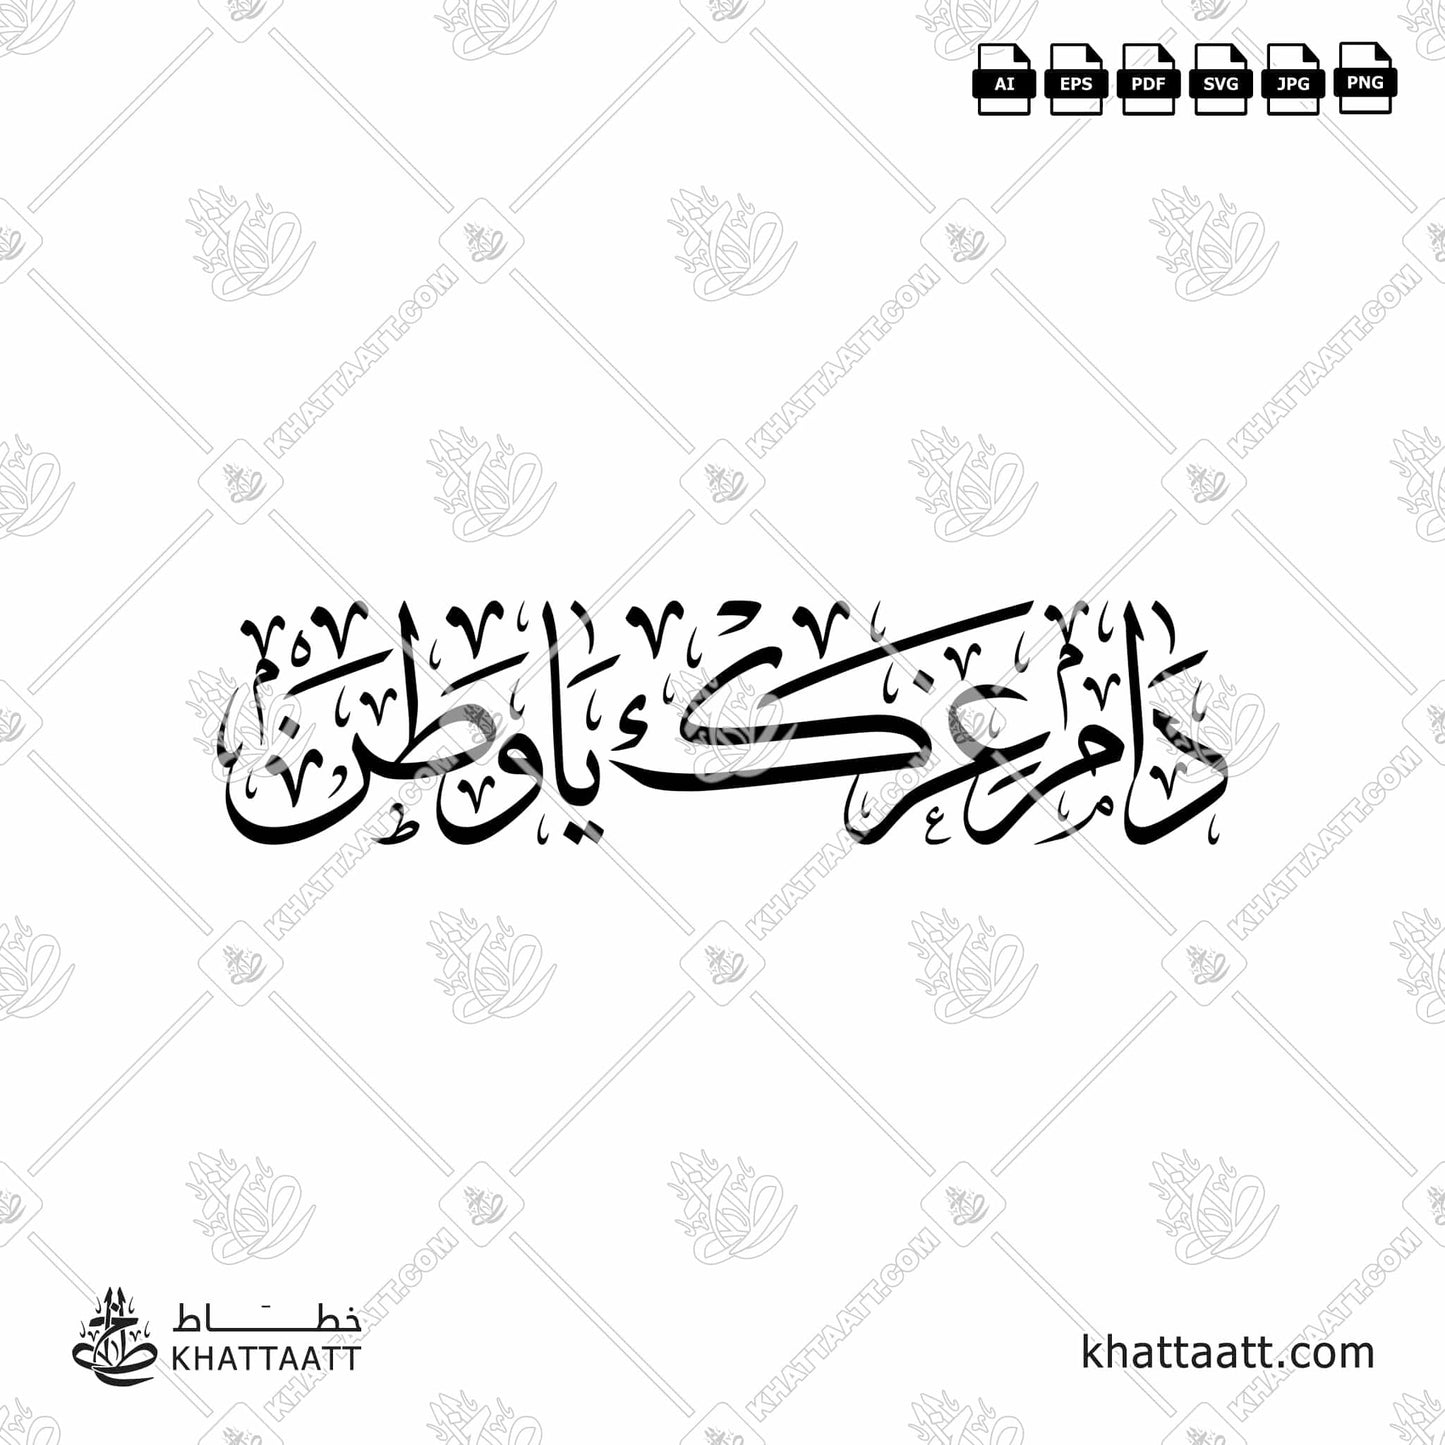 Download Arabic calligraphy تحميل مخطوطة خط عربي of دام عزك يا وطن (T021) Thuluth - خط الثلث in vector فيكتور and png